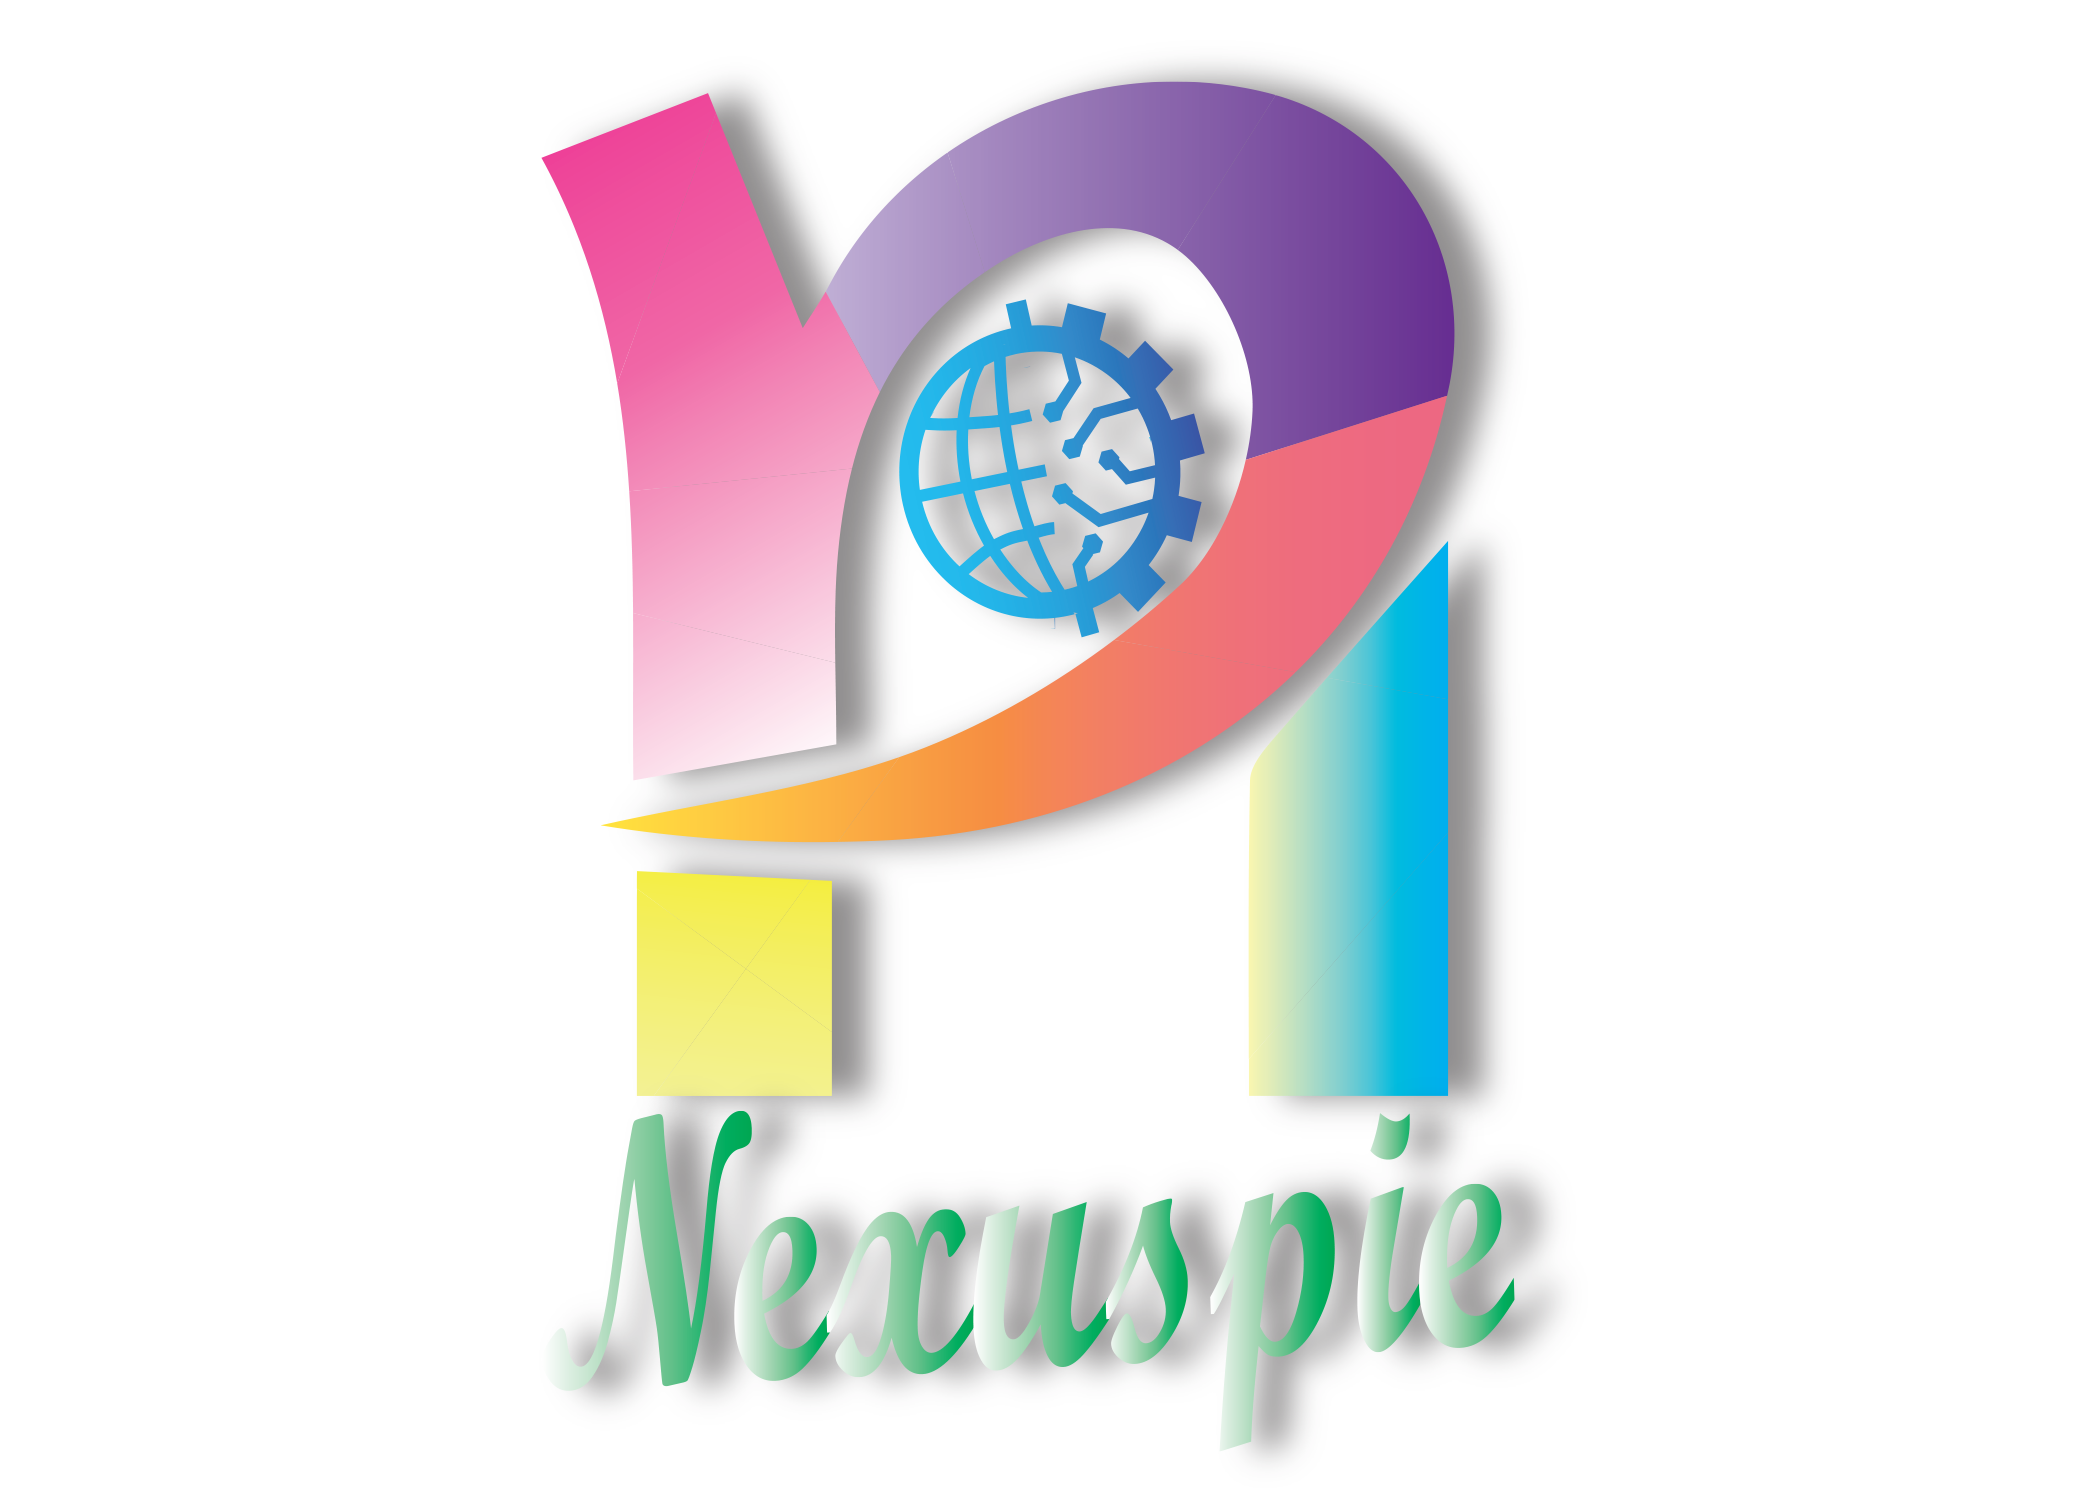 Nexus Pie